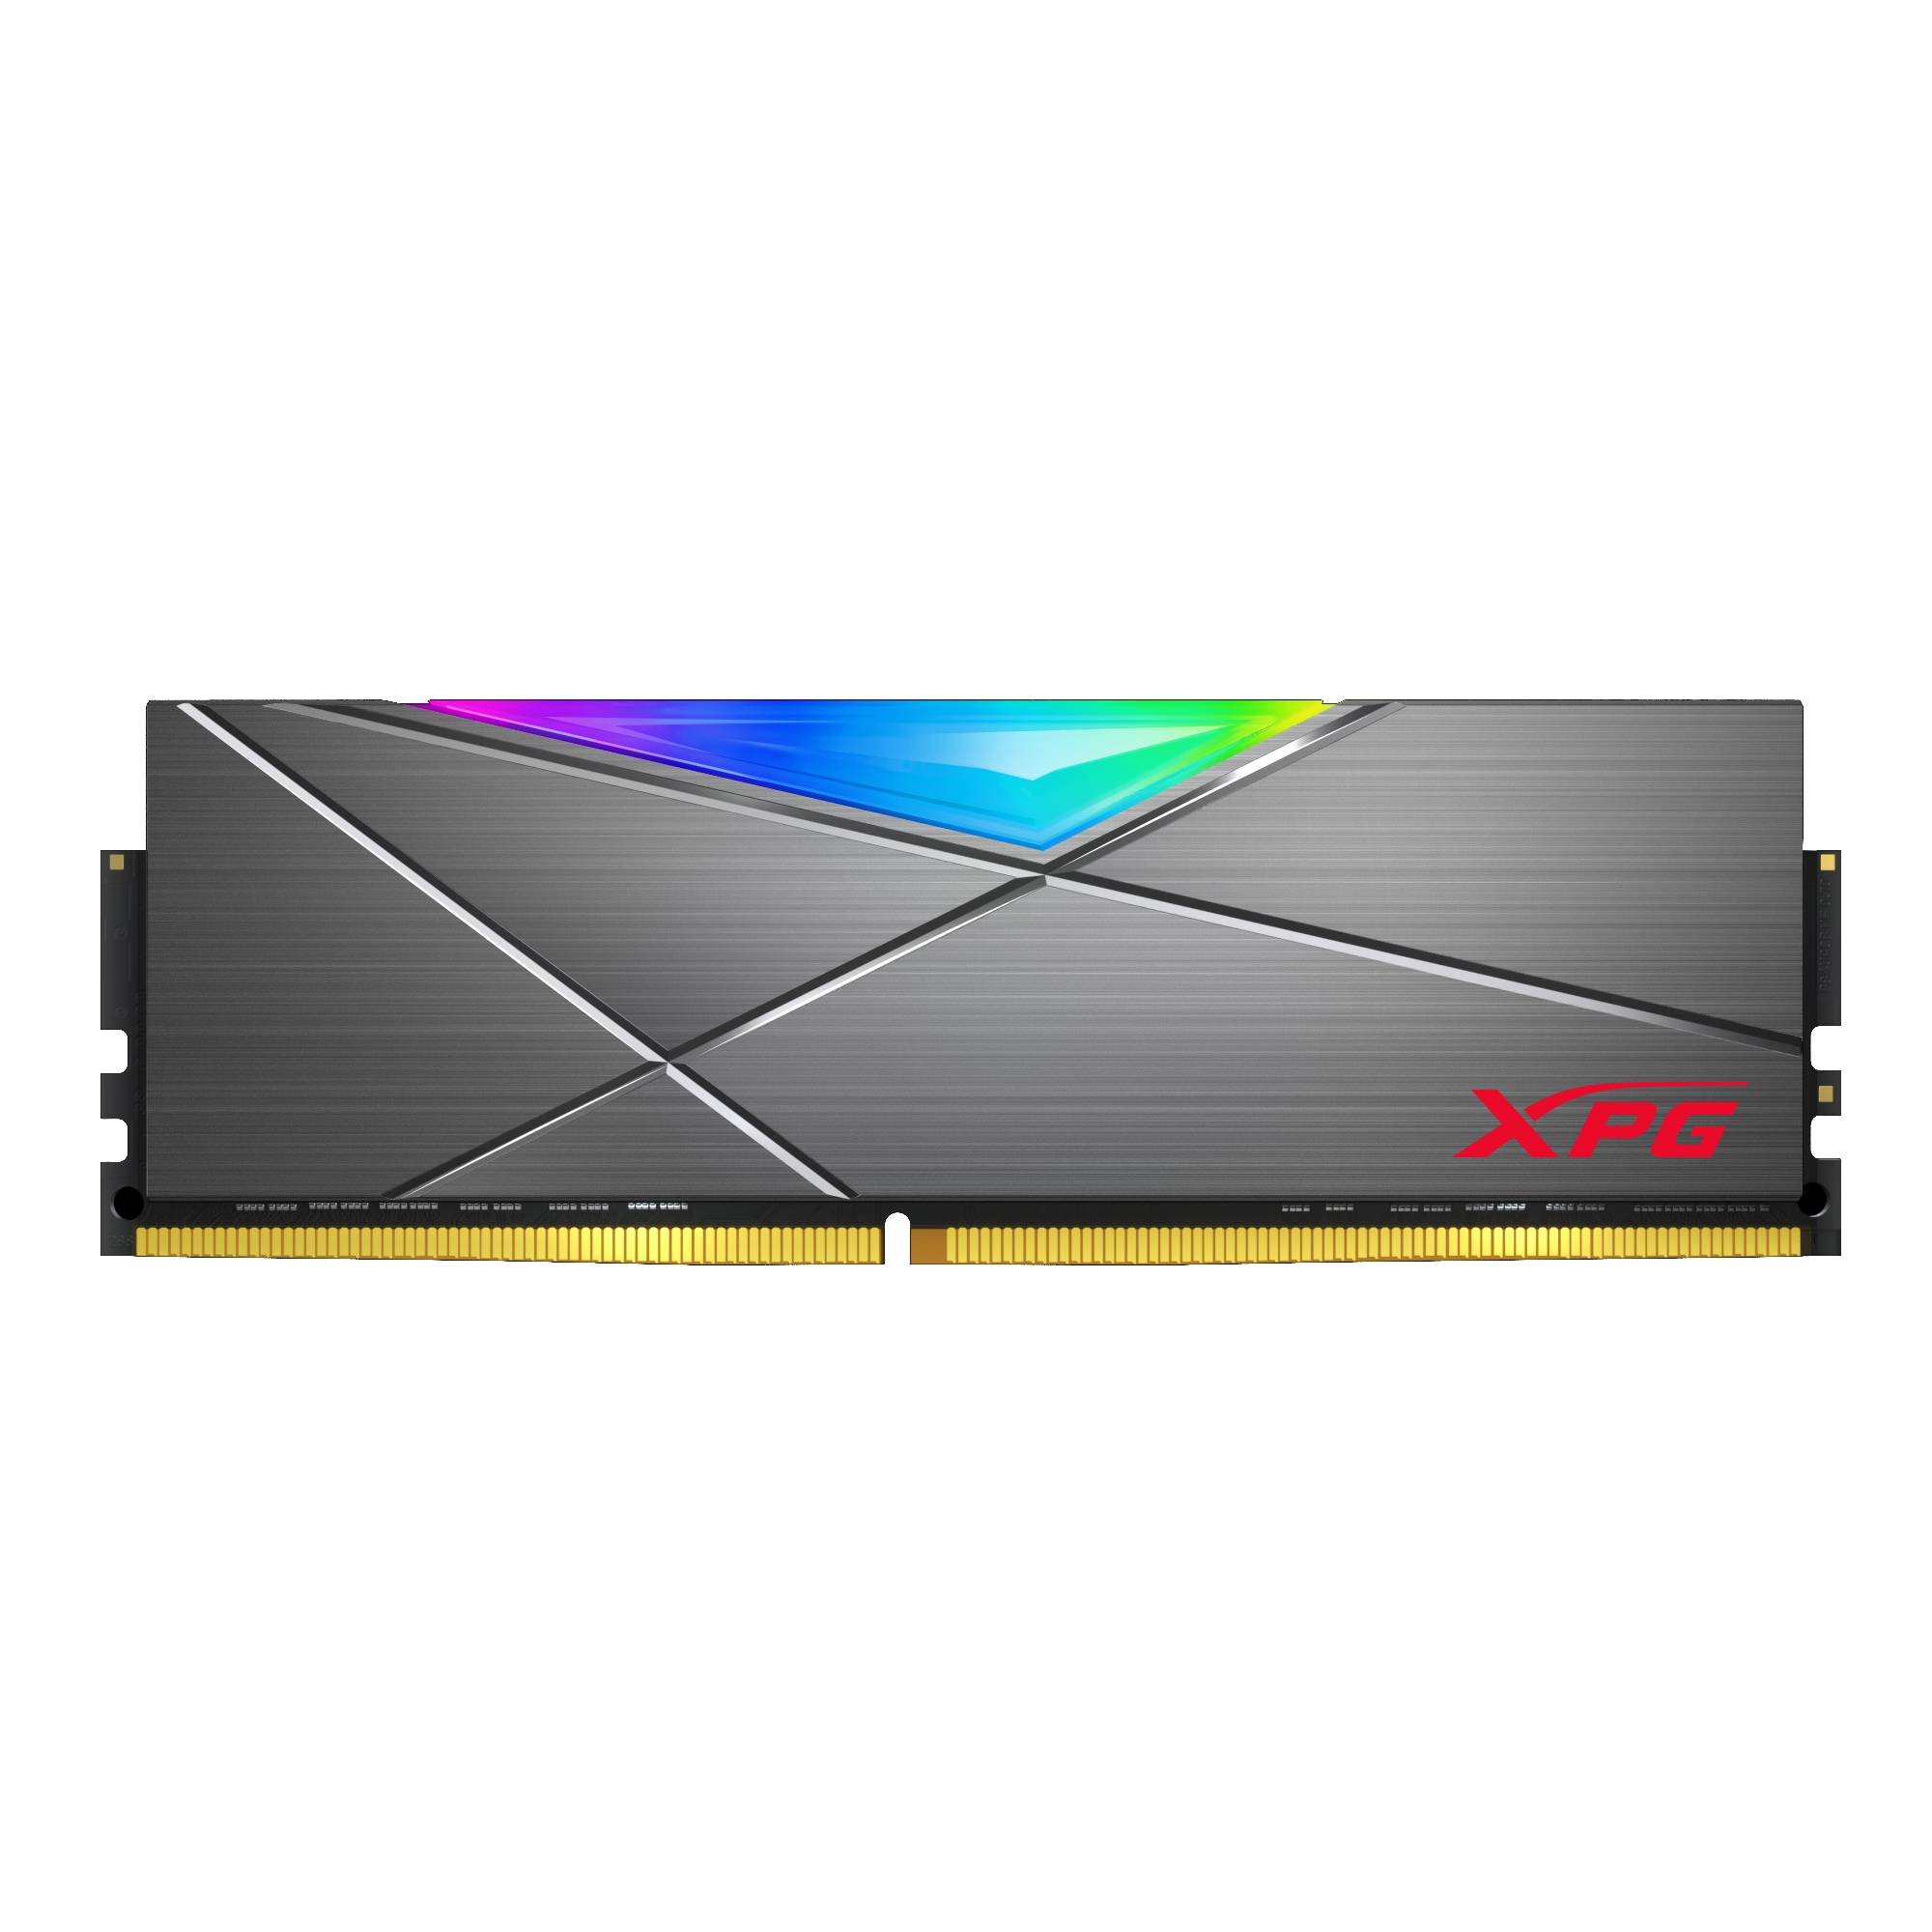 DDR4 RGB 超頻記憶體 / 威剛科技股份有限公司